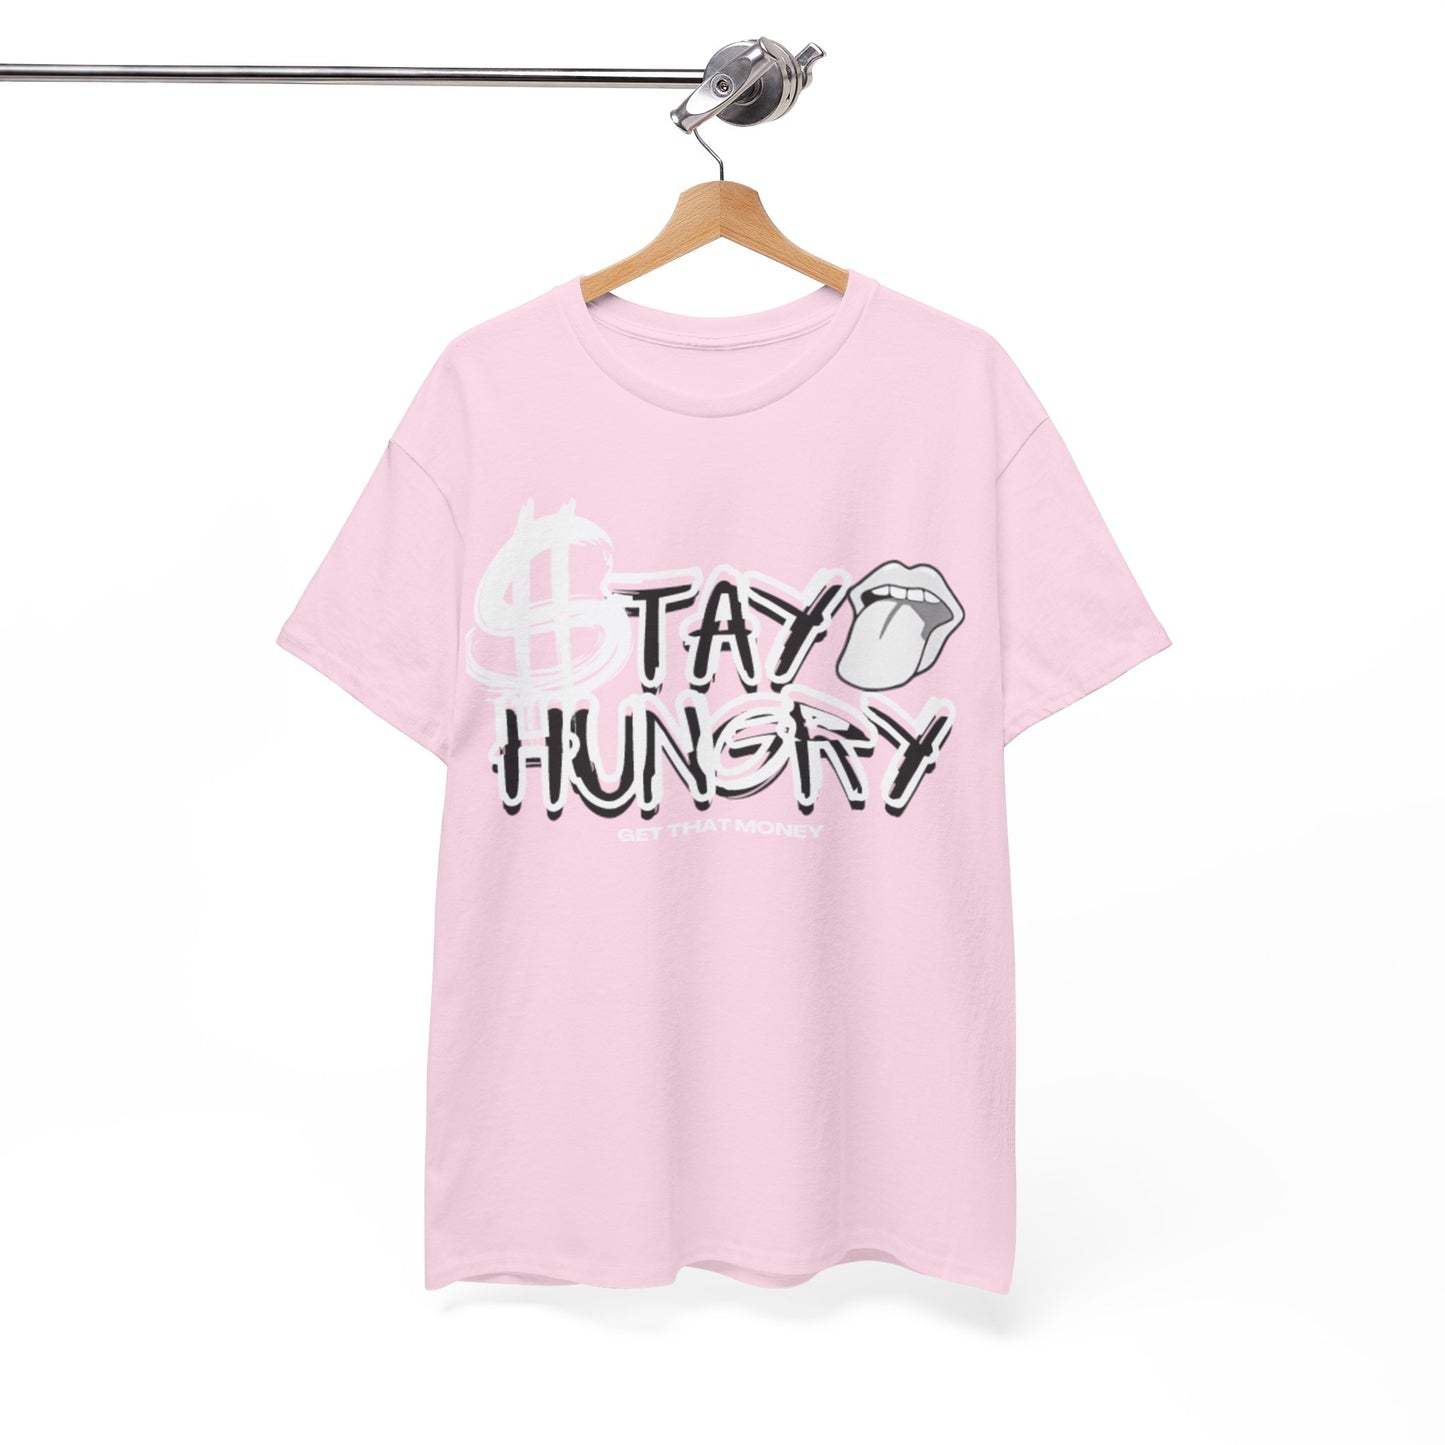 Stay Hungry Tee